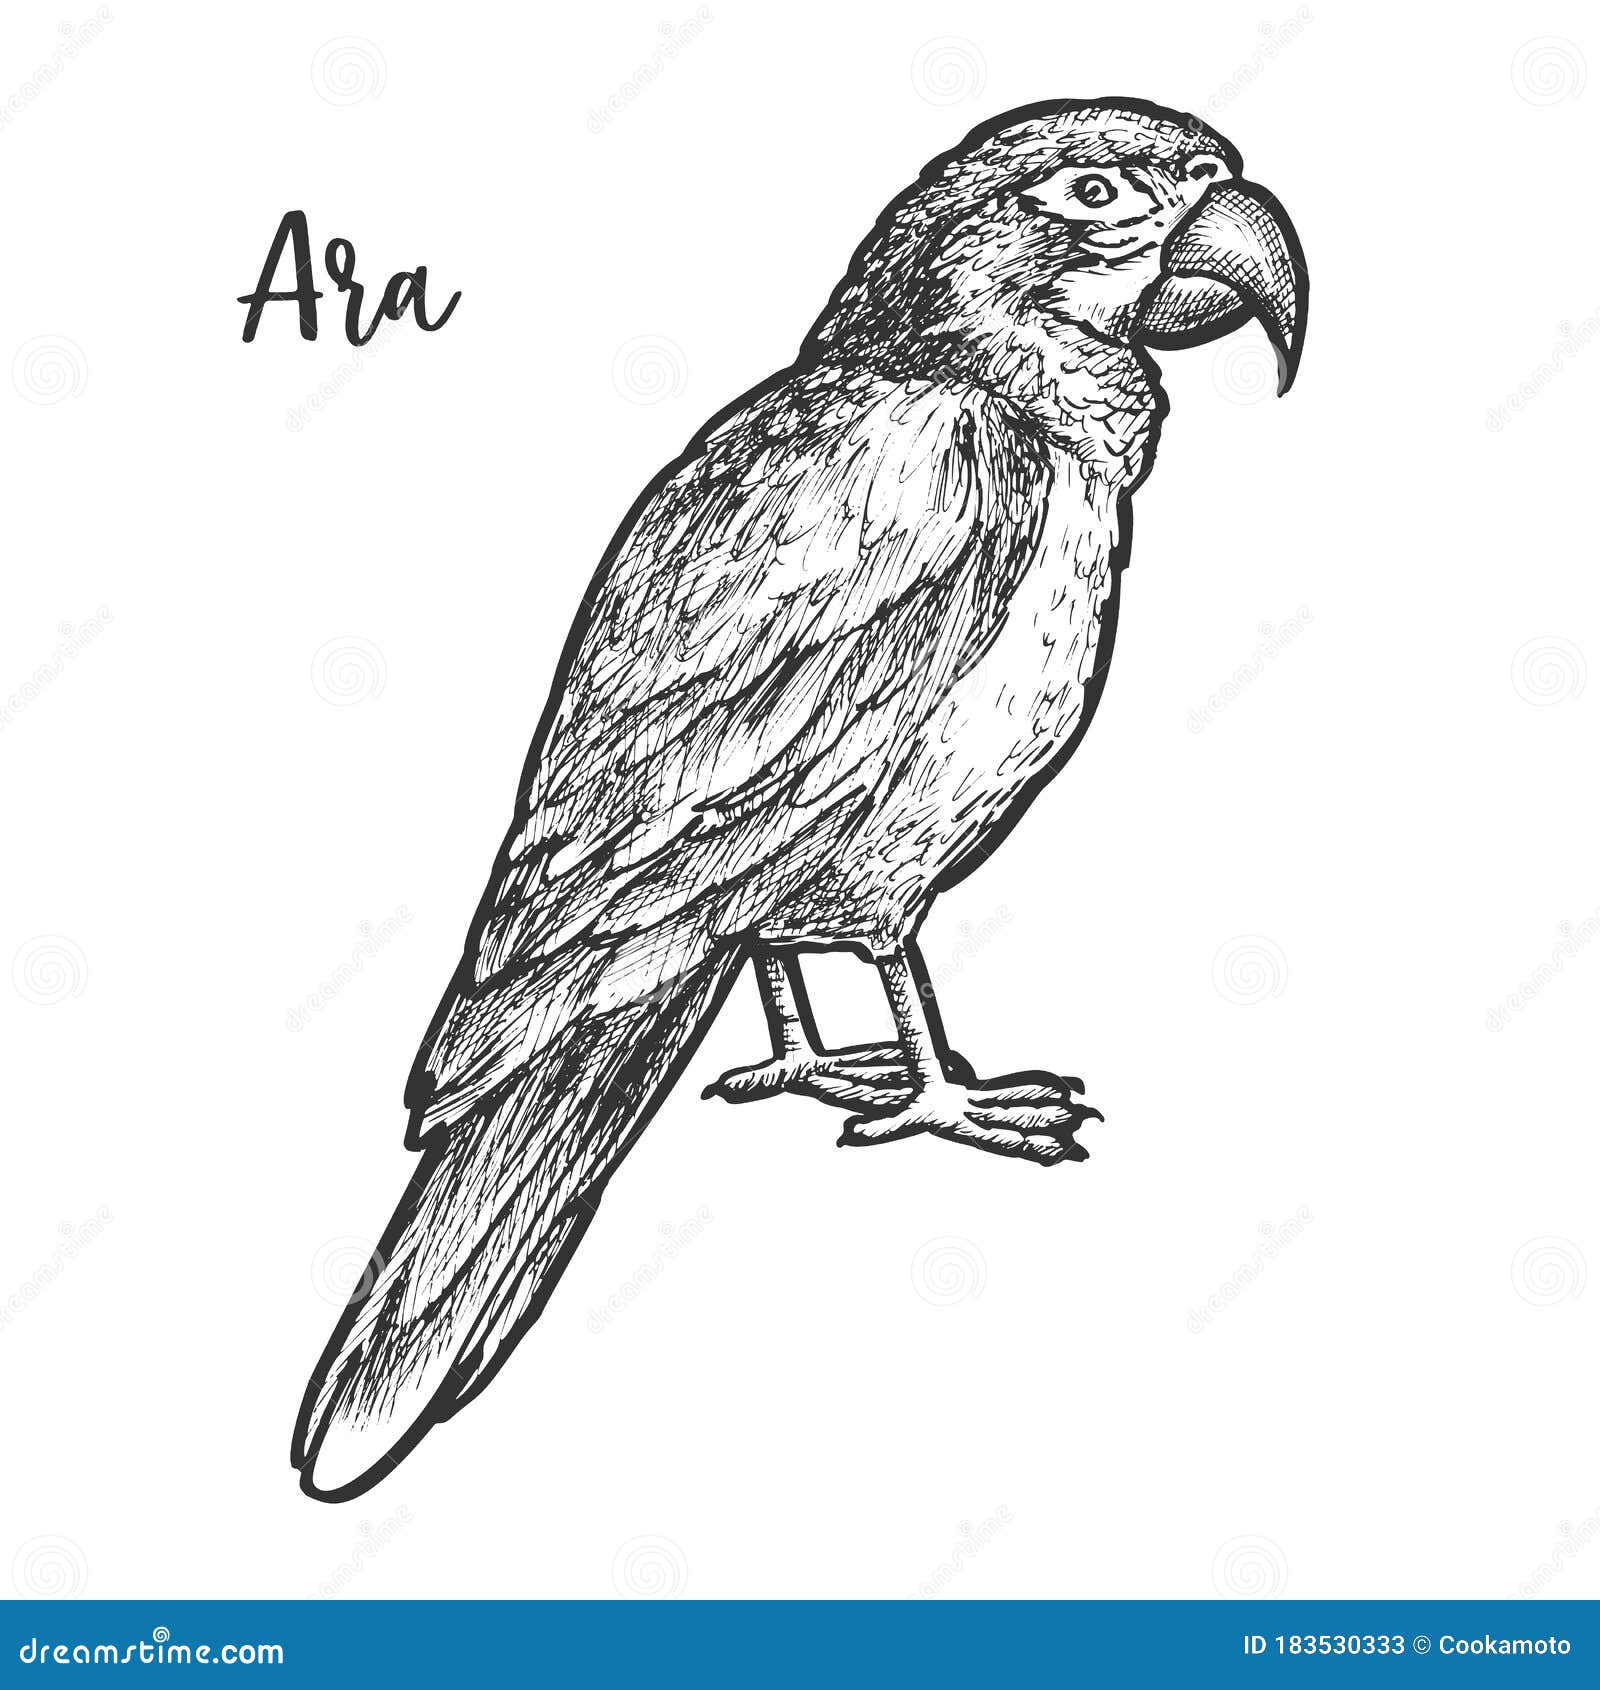 sketch of ara parrot, hand drawn neotropical bird